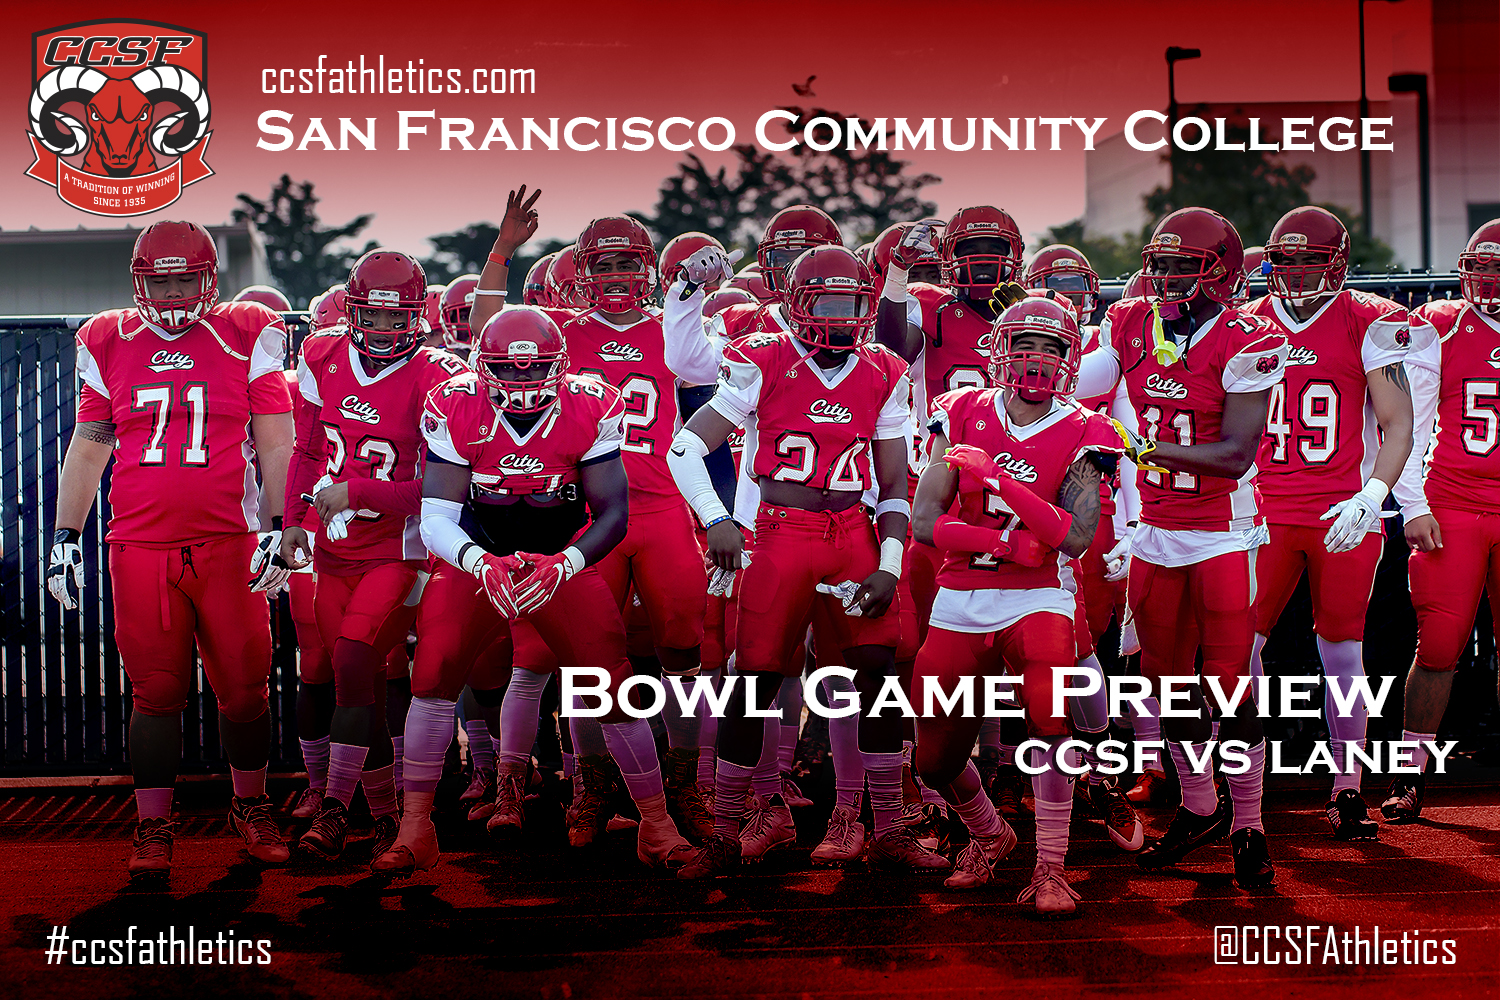 San Francisco Community College Bowl Game Preview - CCSF vs Laney